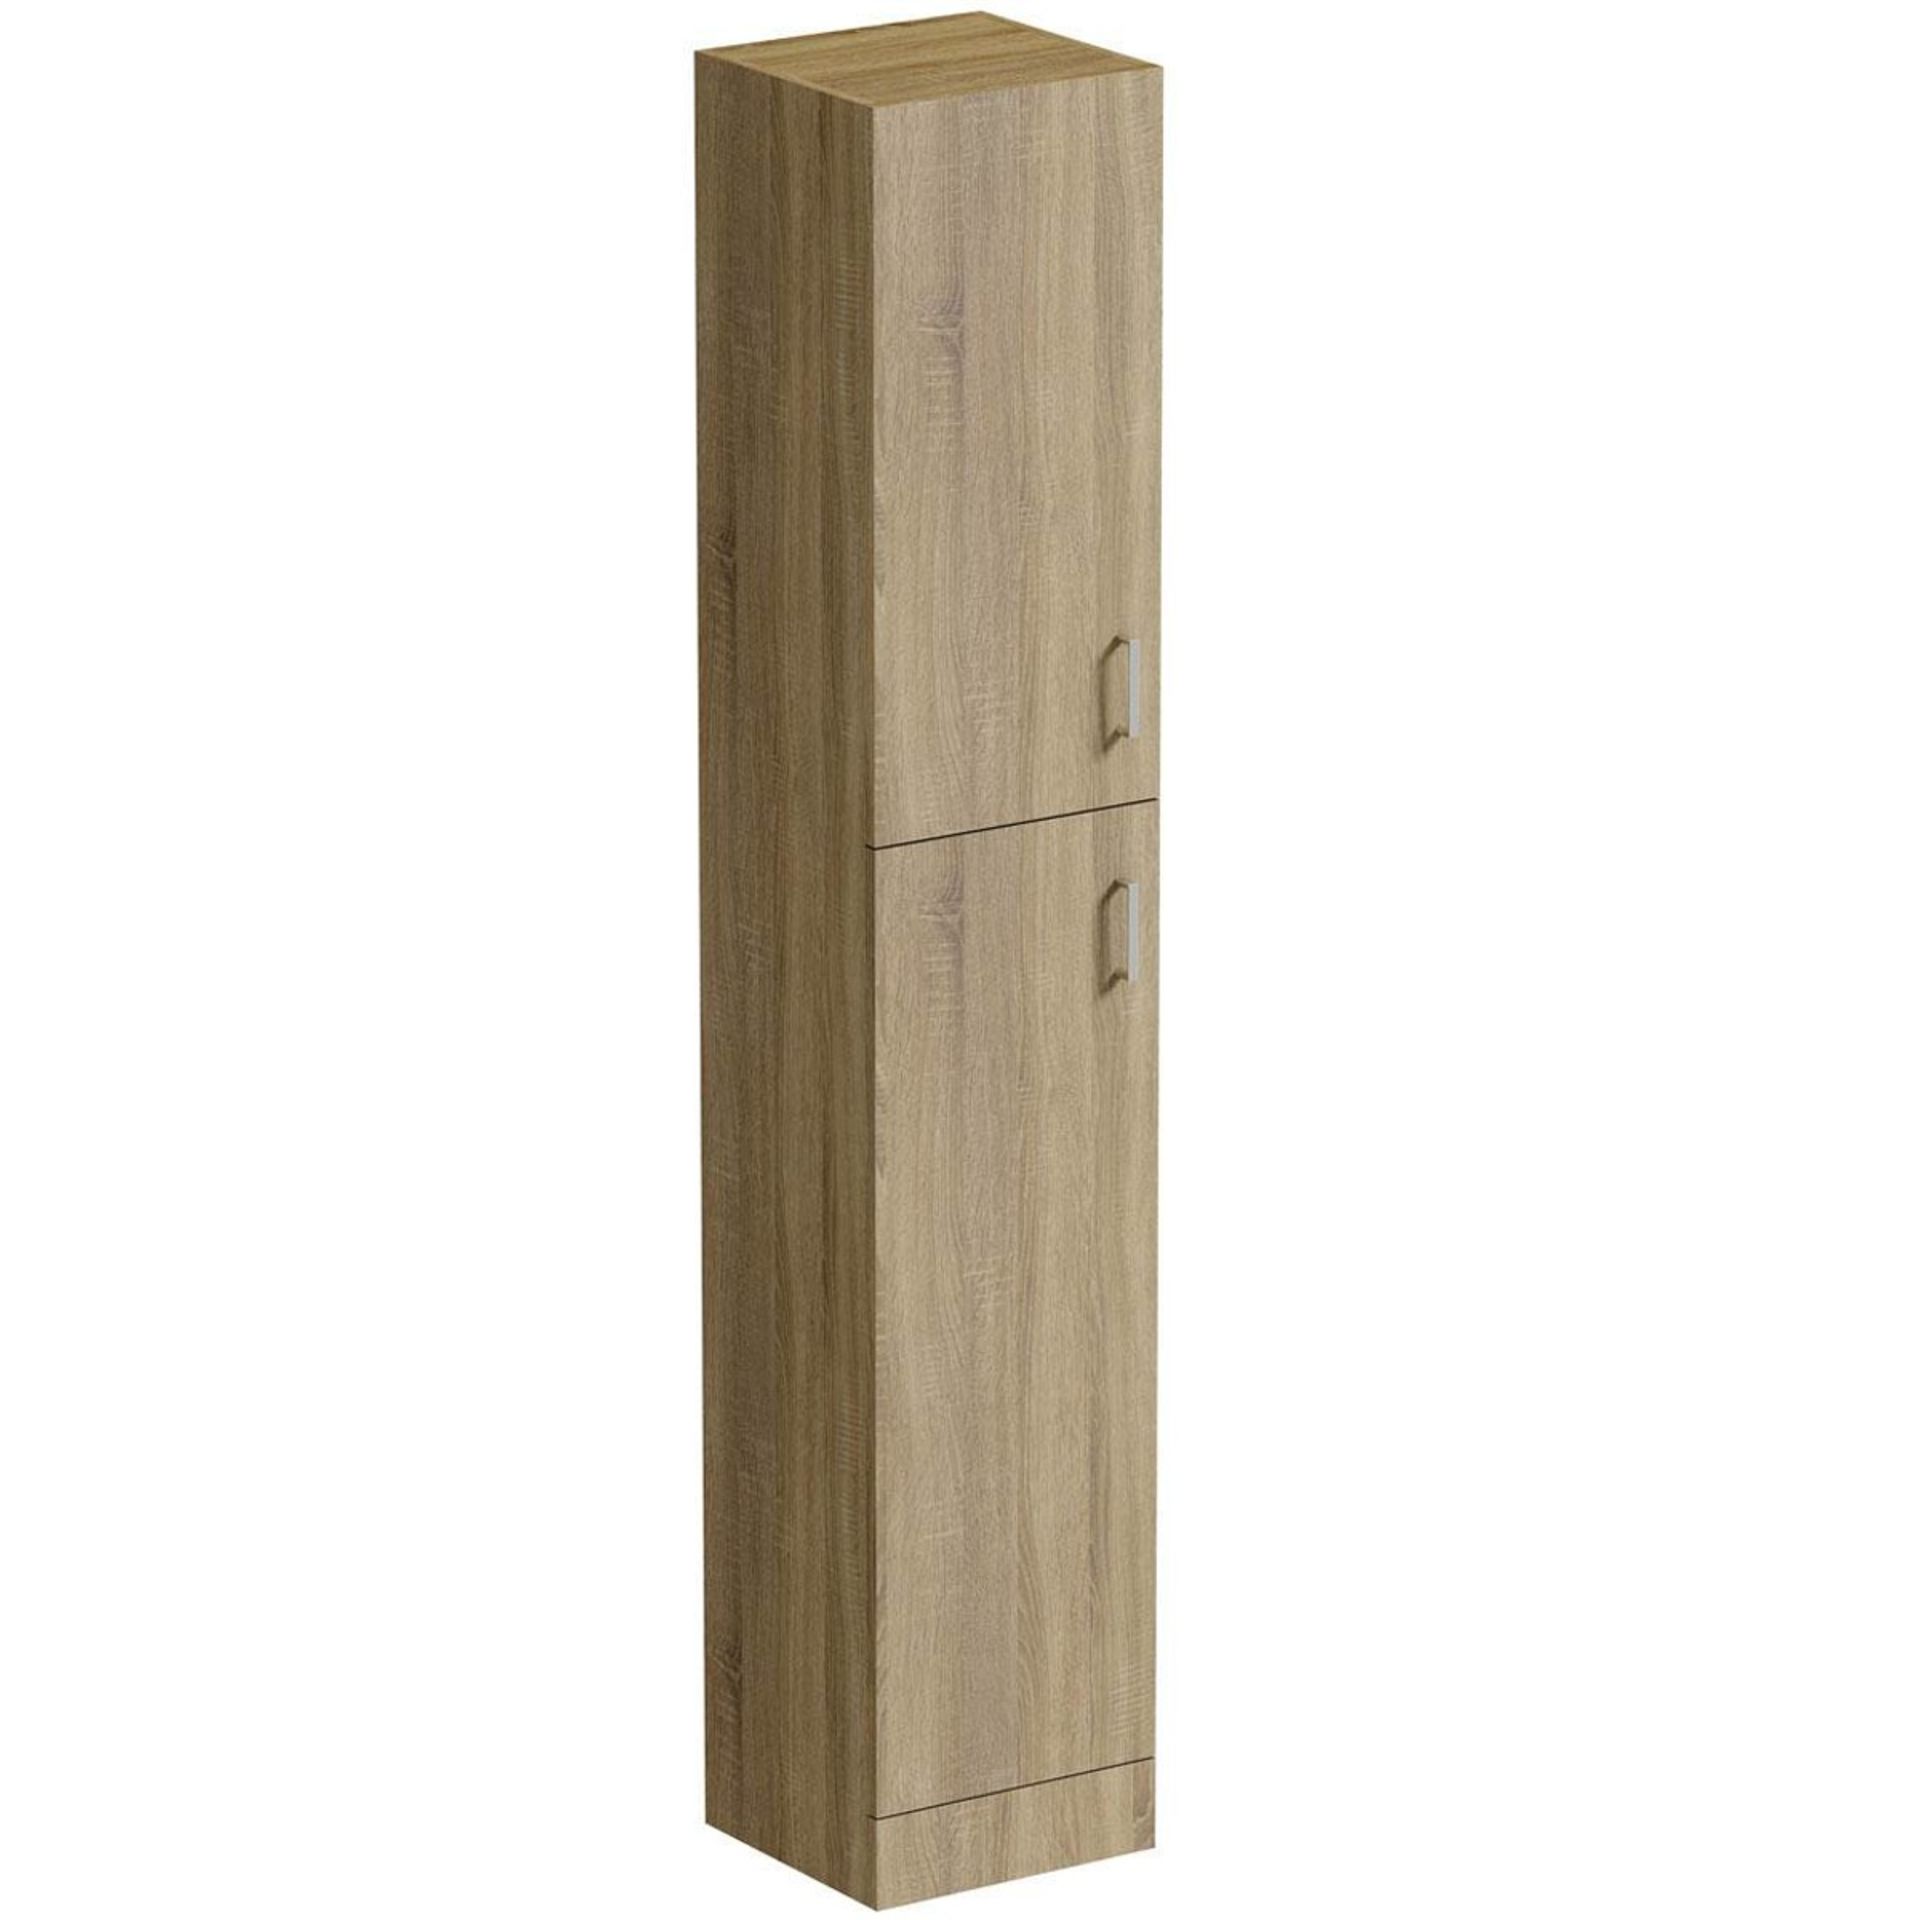 1 x Sienna Oak 300mm Tall Bathroom Storage Unit - Unused Stock - CL190 - Ref BR063 - Location: Bolto - Image 2 of 5